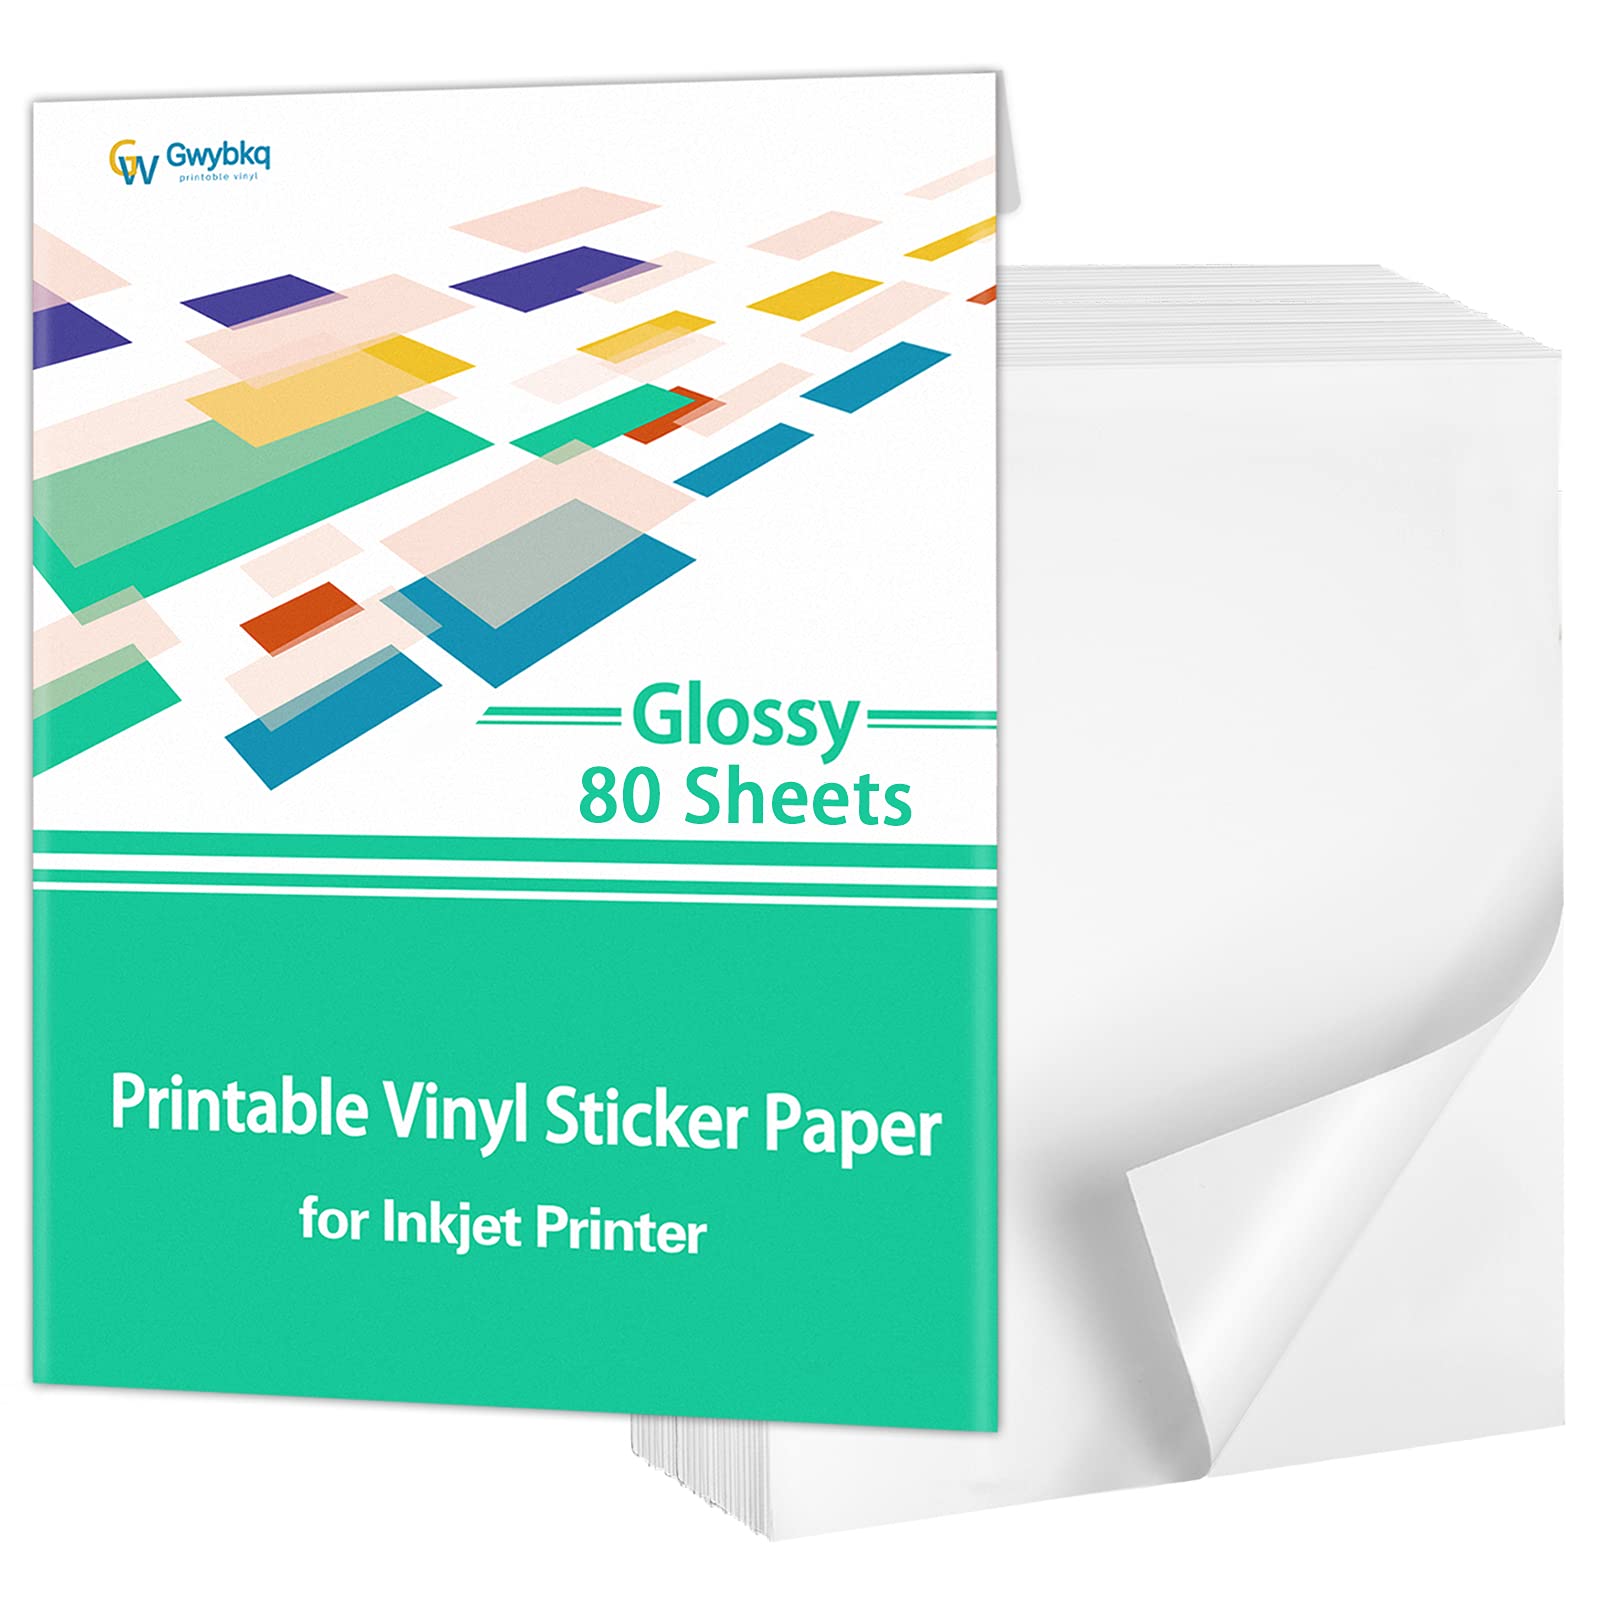 Gwybkq glossy Sticker Paper Printable Vinyl for Inkjet Printer, 80 Sheets Labels Waterproof Decal Paper